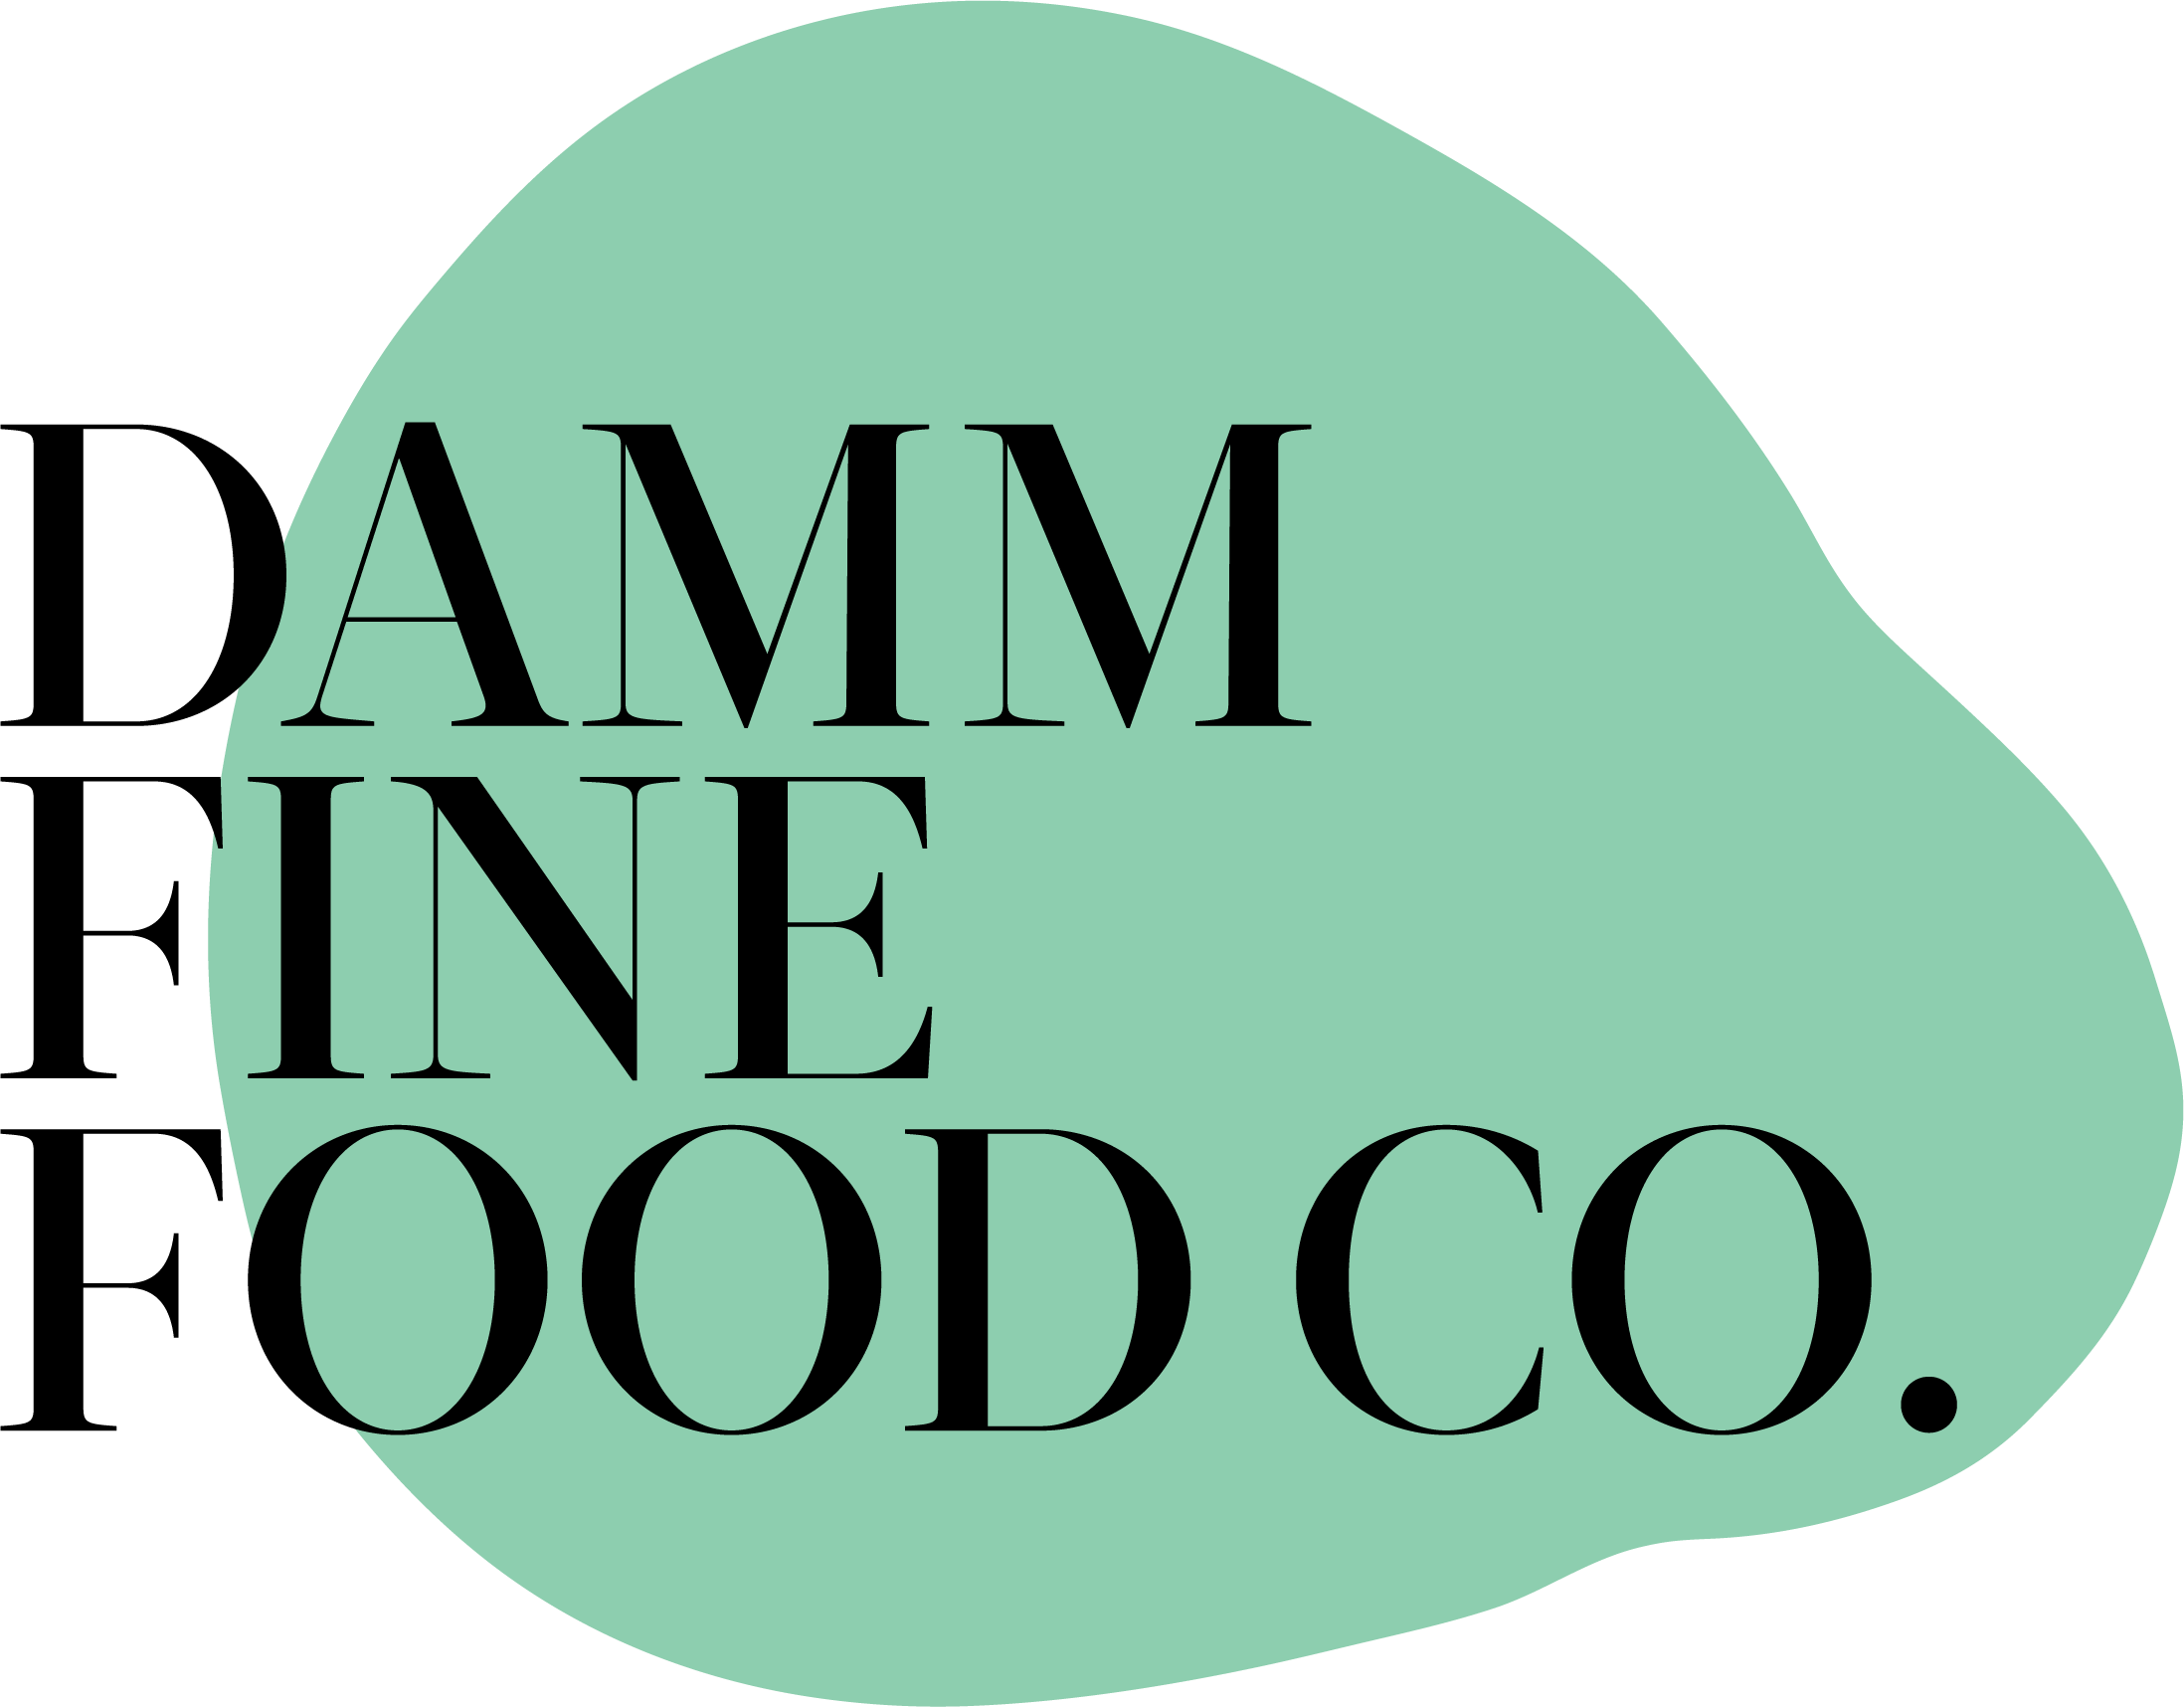 Damm Fine Food Co.